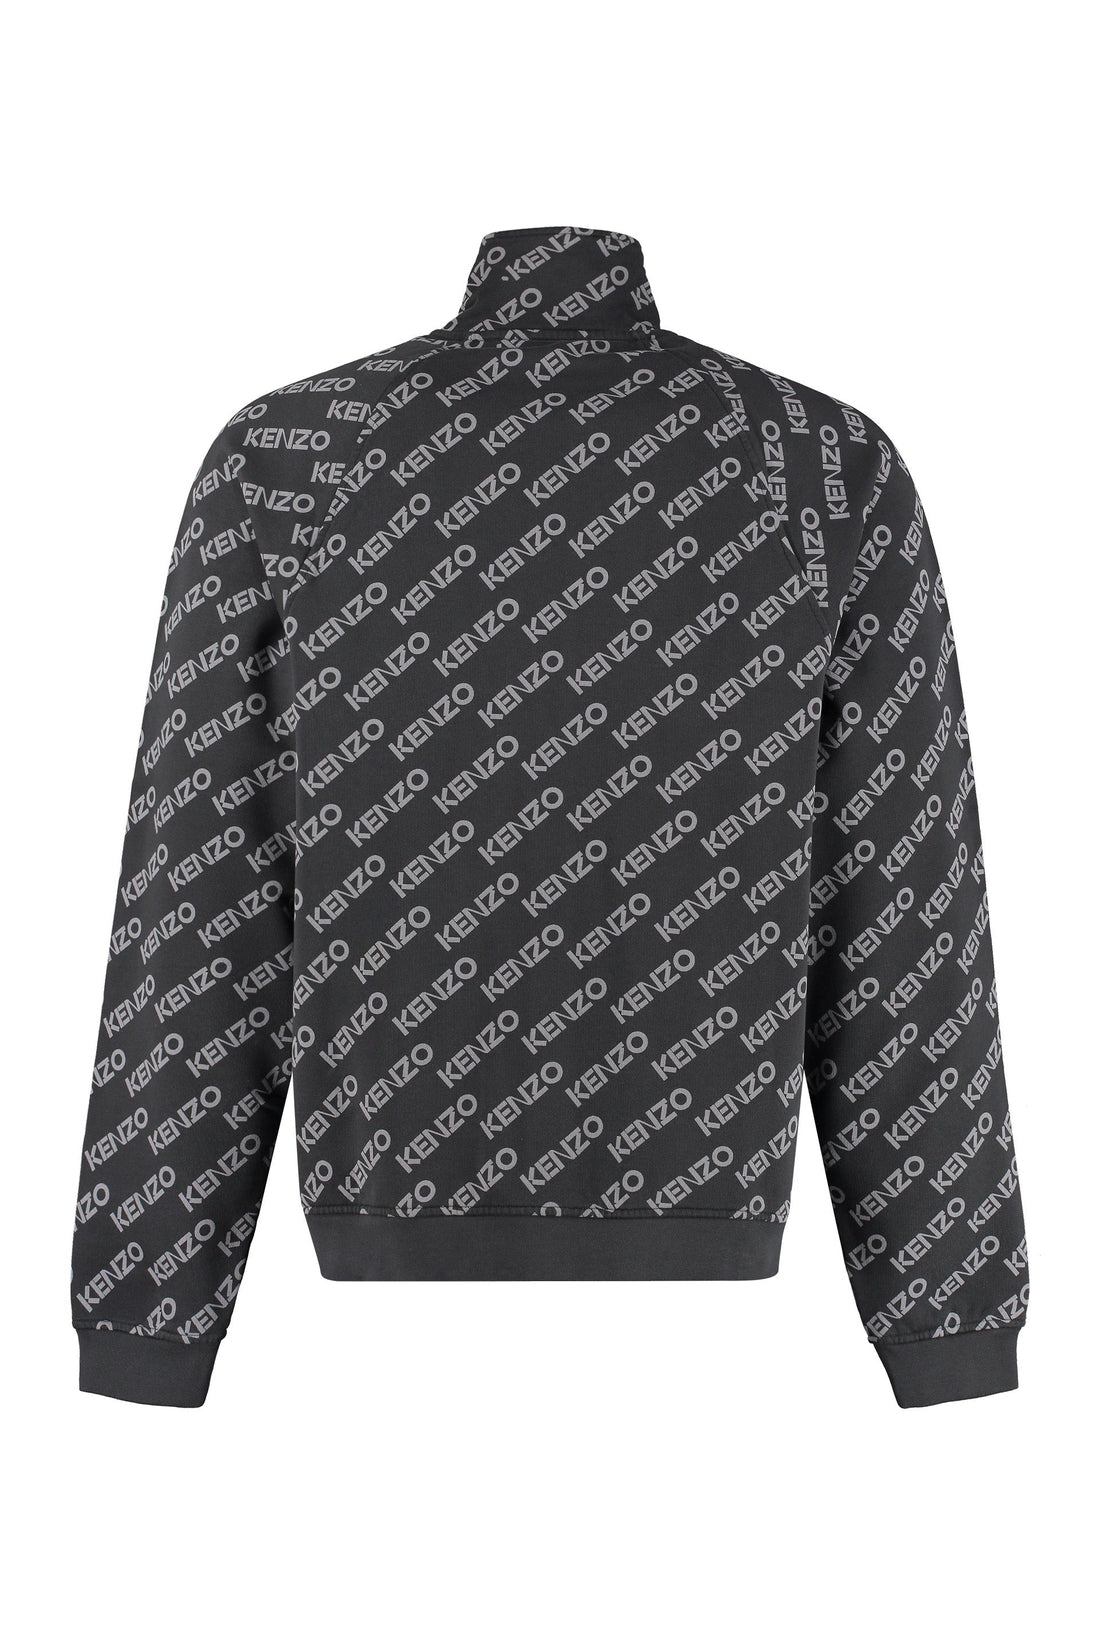 Kenzo-OUTLET-SALE-Cotton full-zip sweatshirt-ARCHIVIST